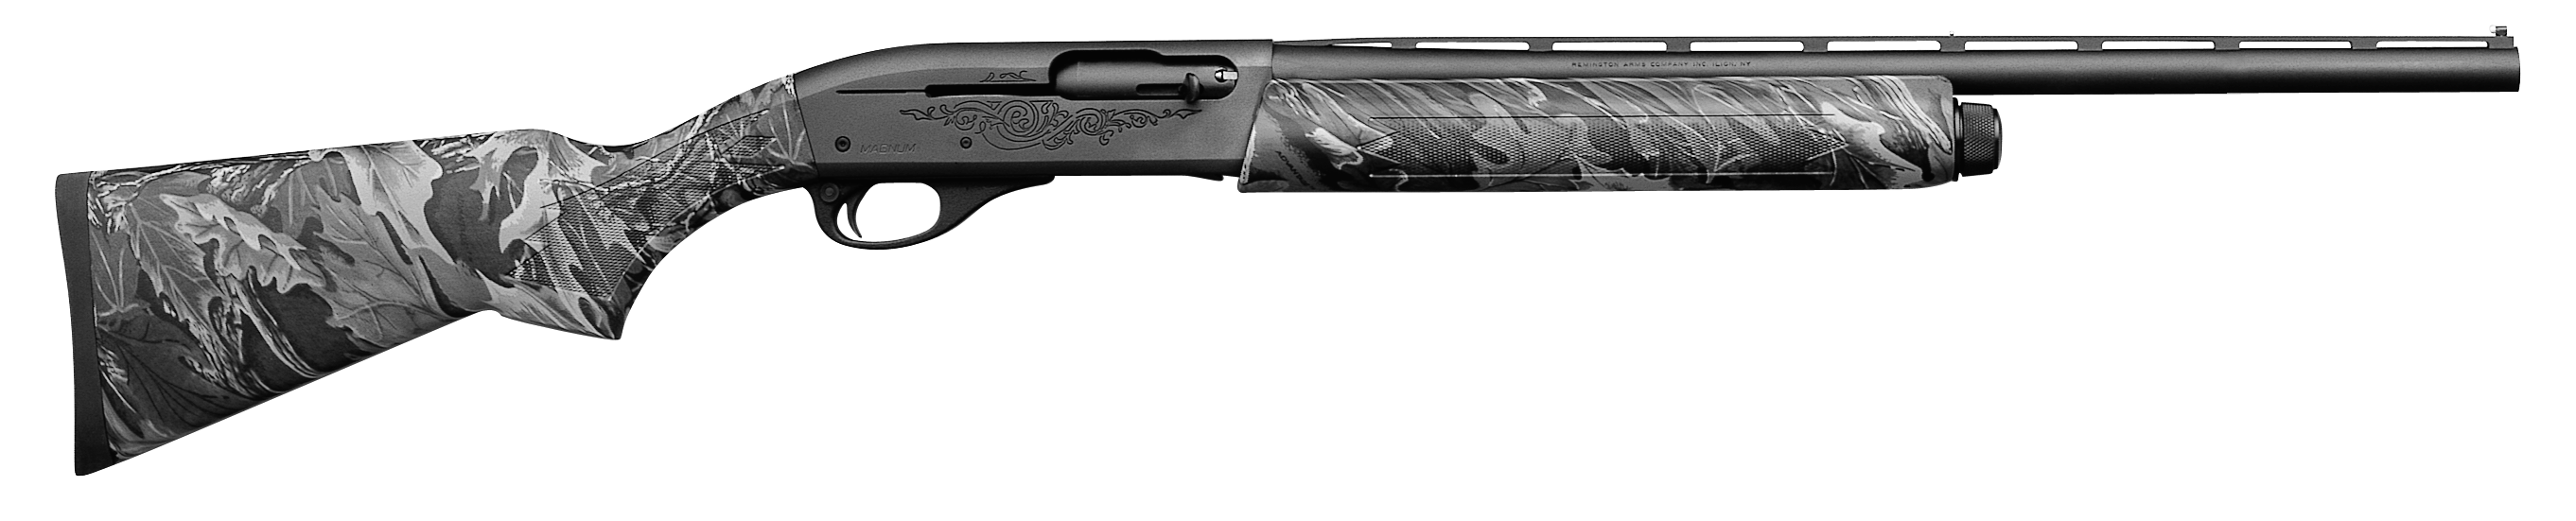 NOS Unfinished LT/LW 20 Gauge Youth Stock Remington 1100 